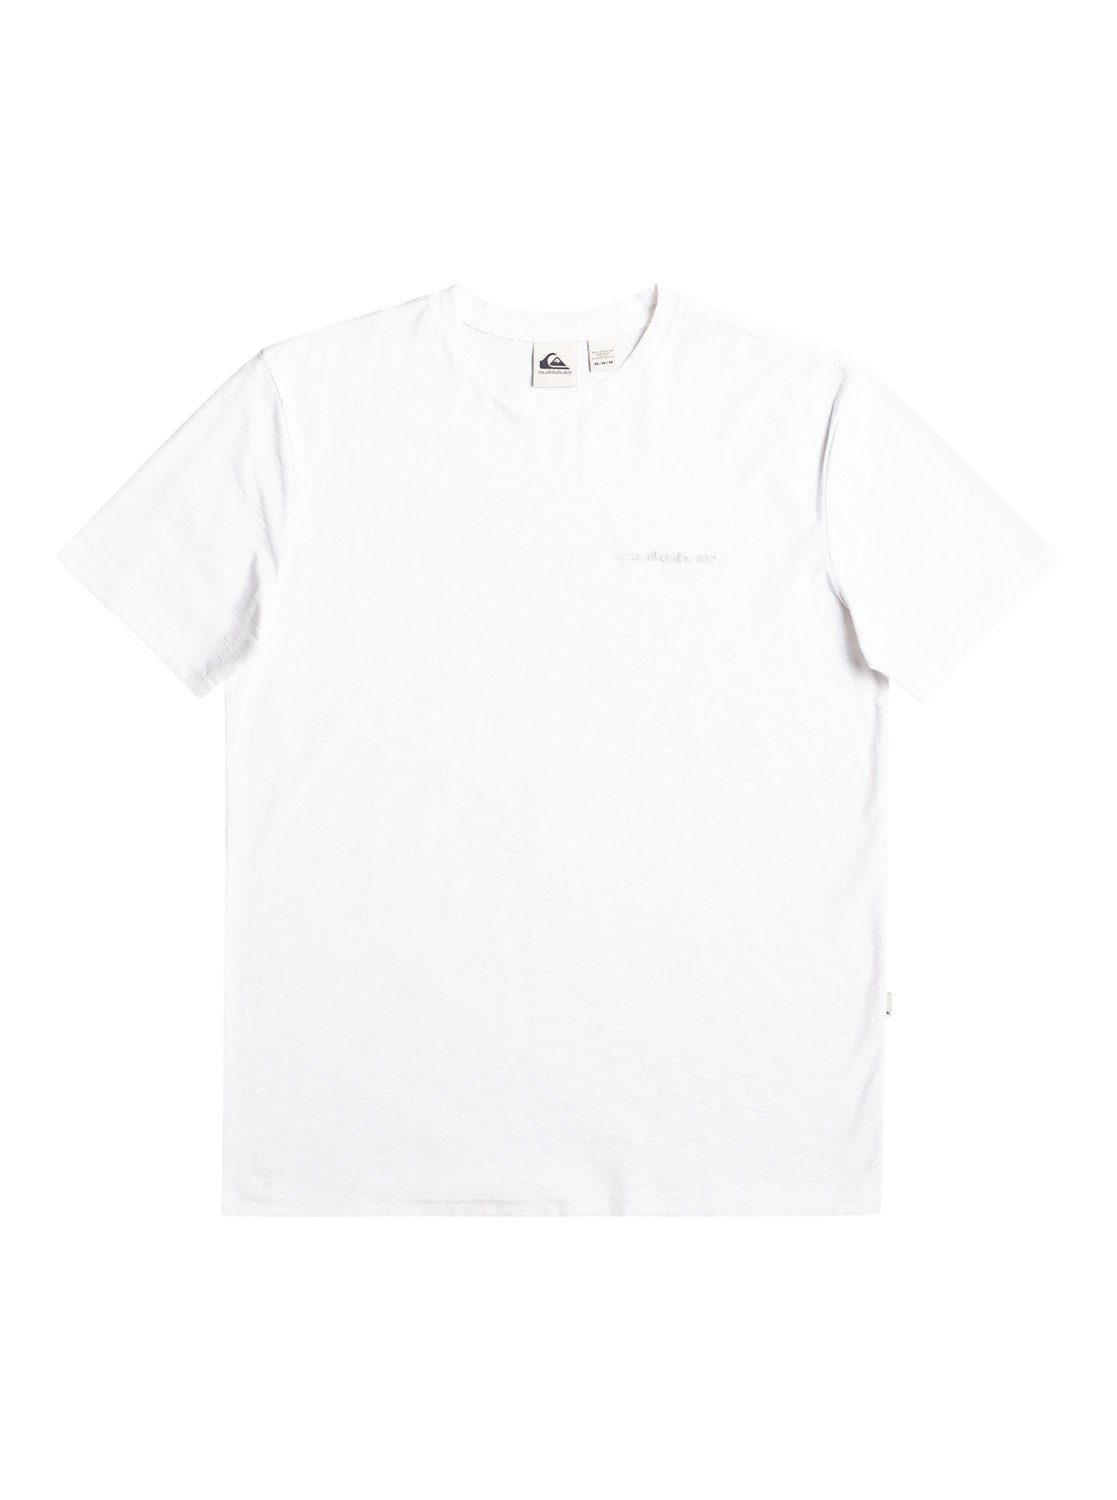 Quiksilver Slub T-Shirt Roundneck White